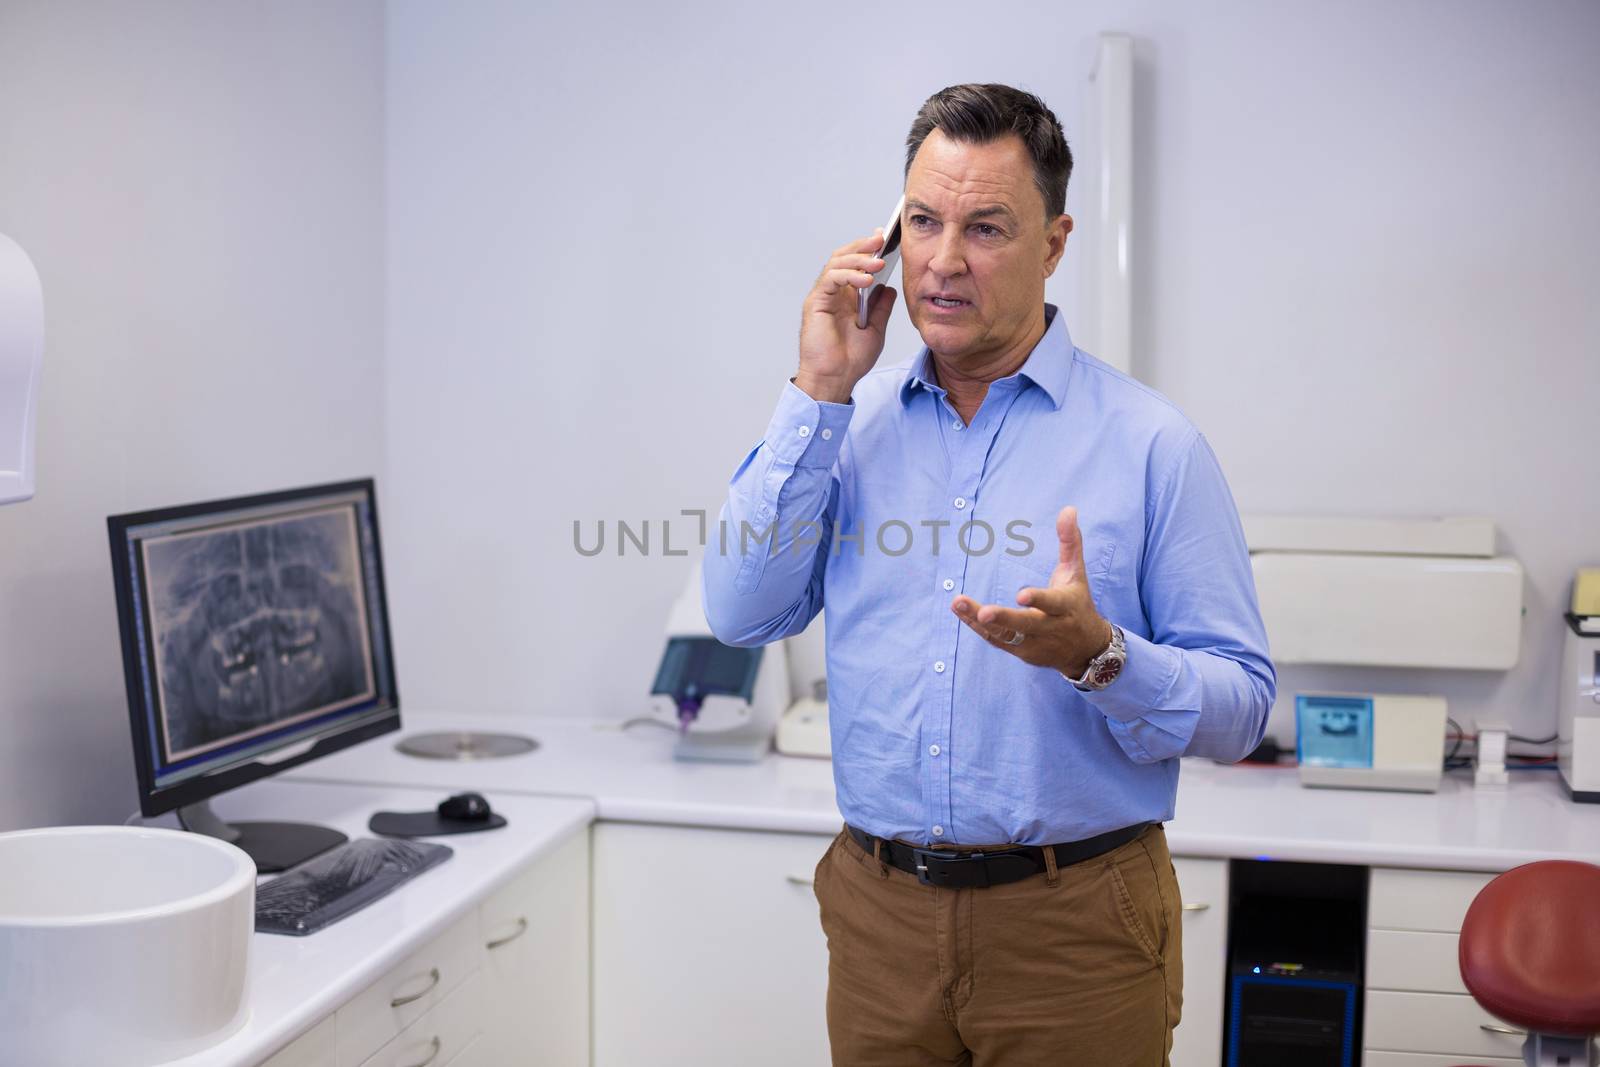 Dentist talking on mobile phone by Wavebreakmedia